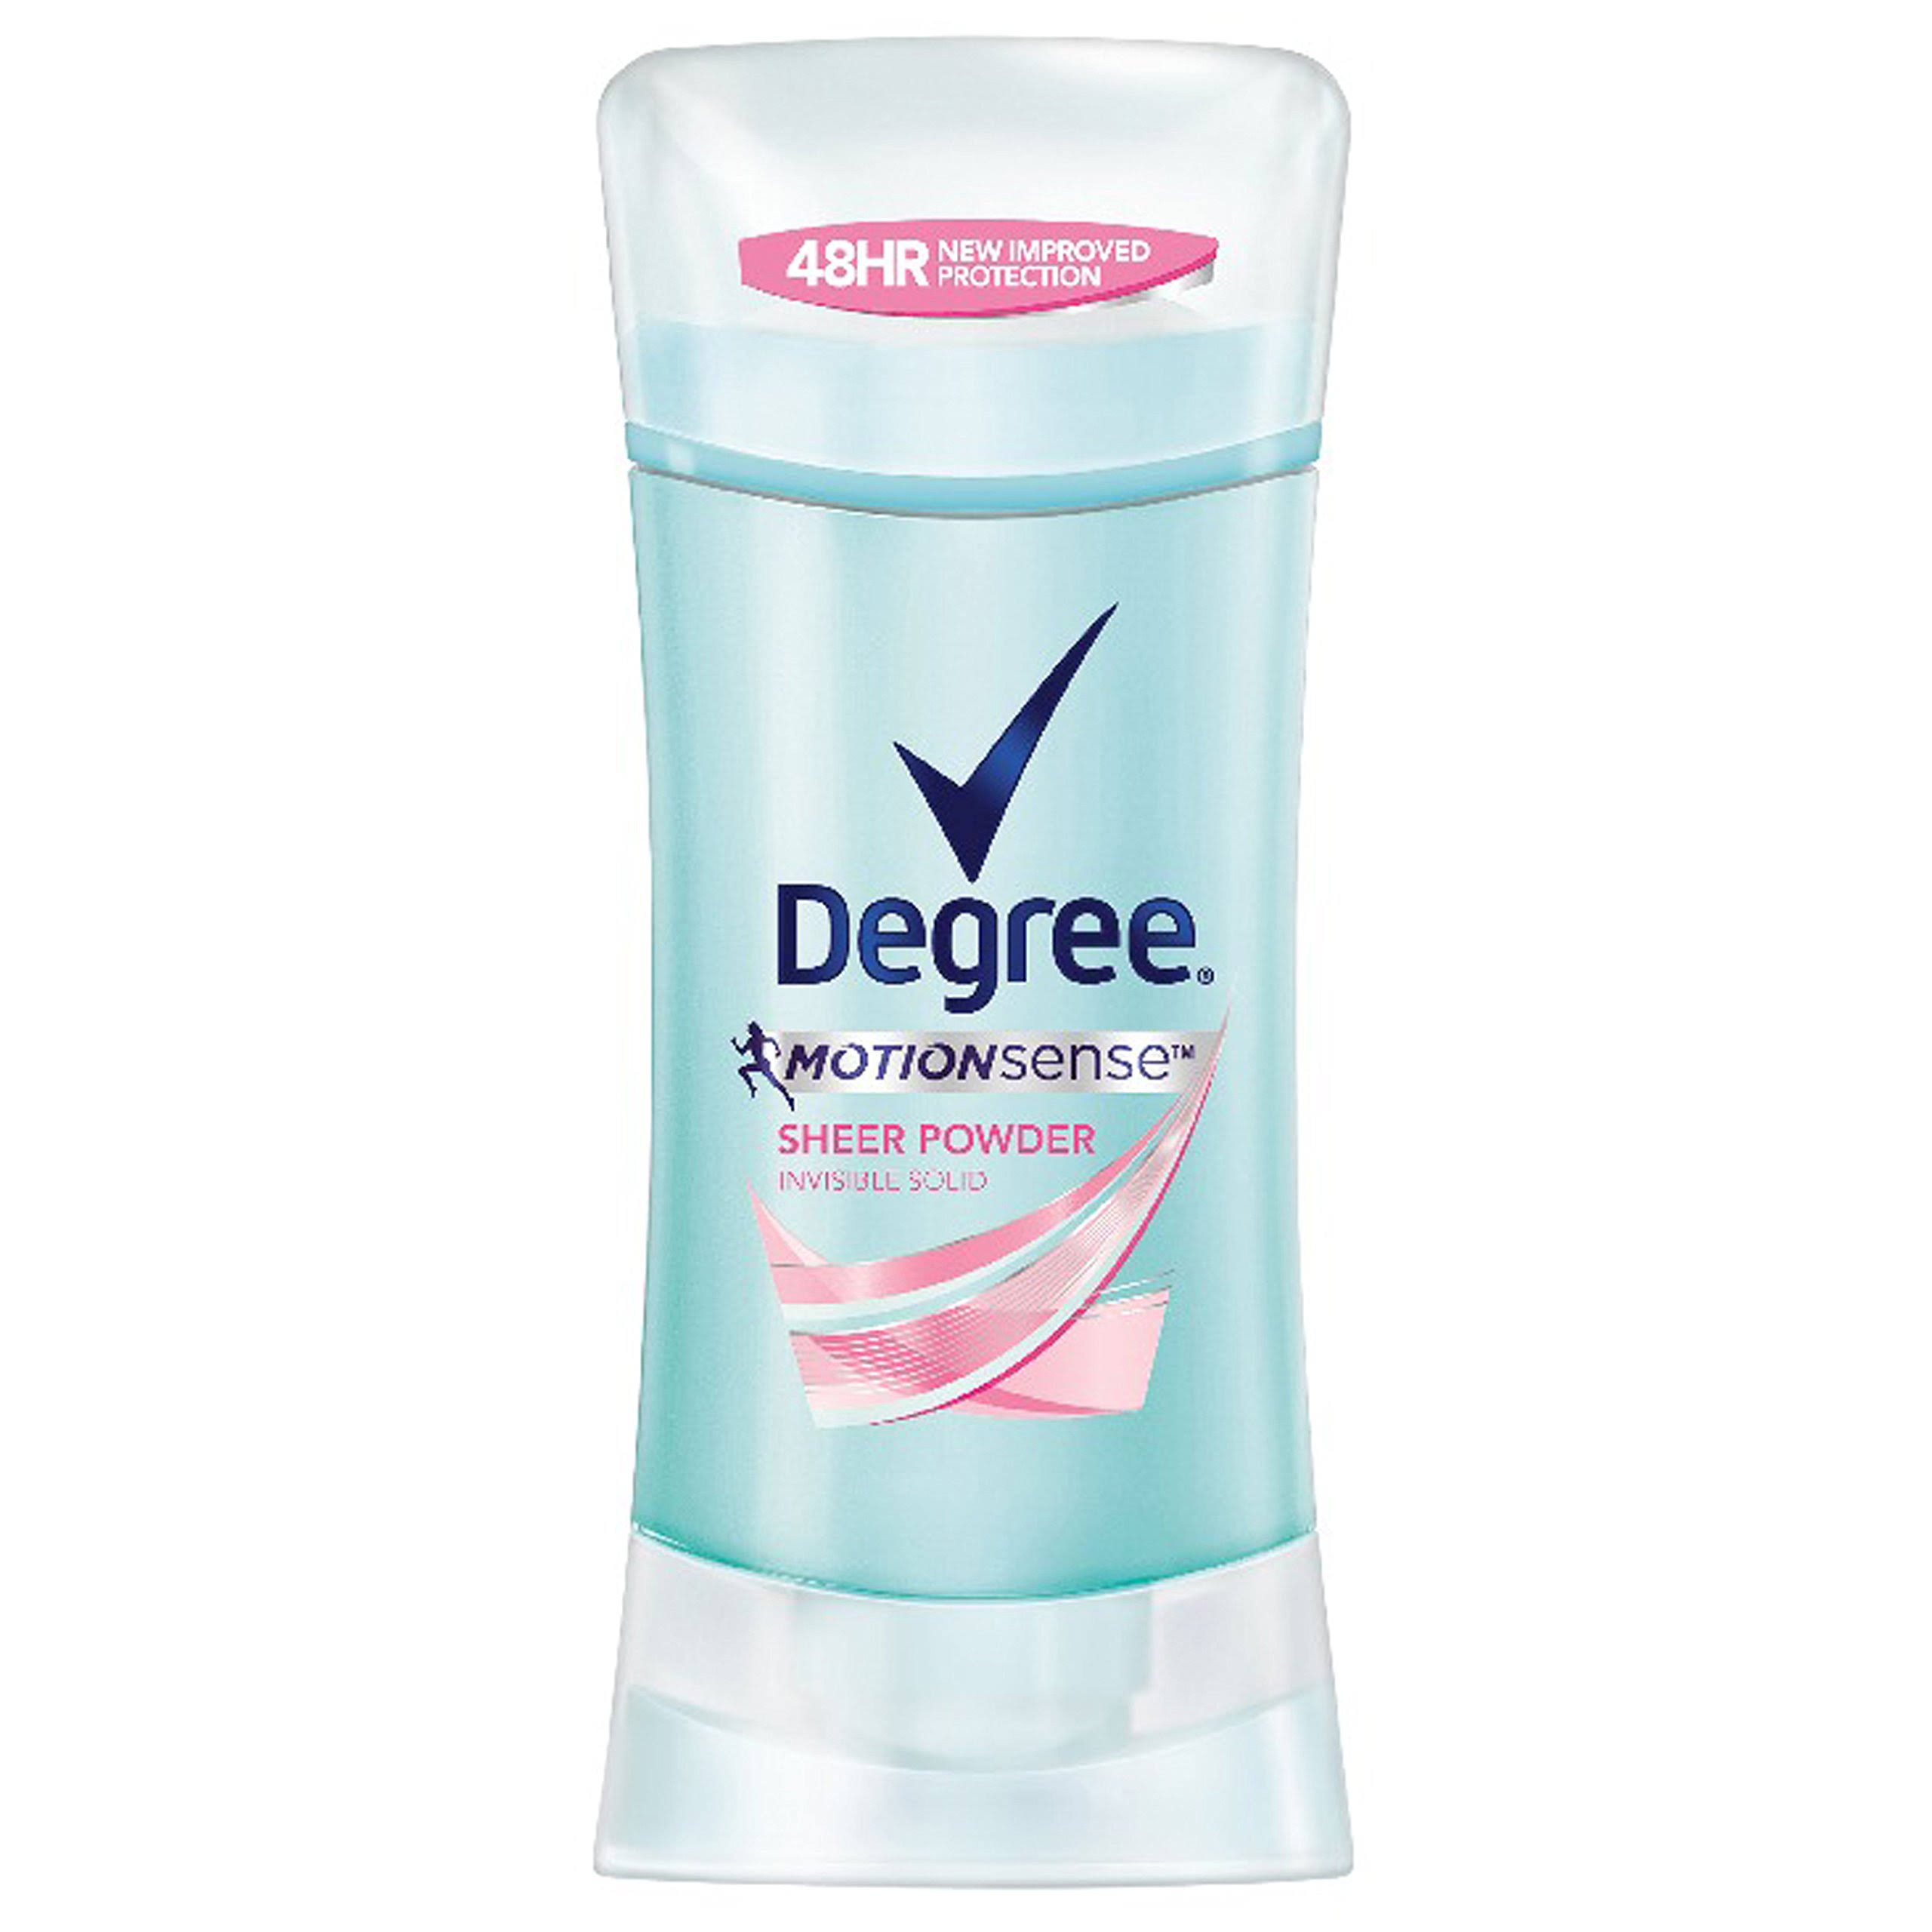 Degree Motion Sense Sheer Powder Anti Perspirant and Deodorant - 2.6oz